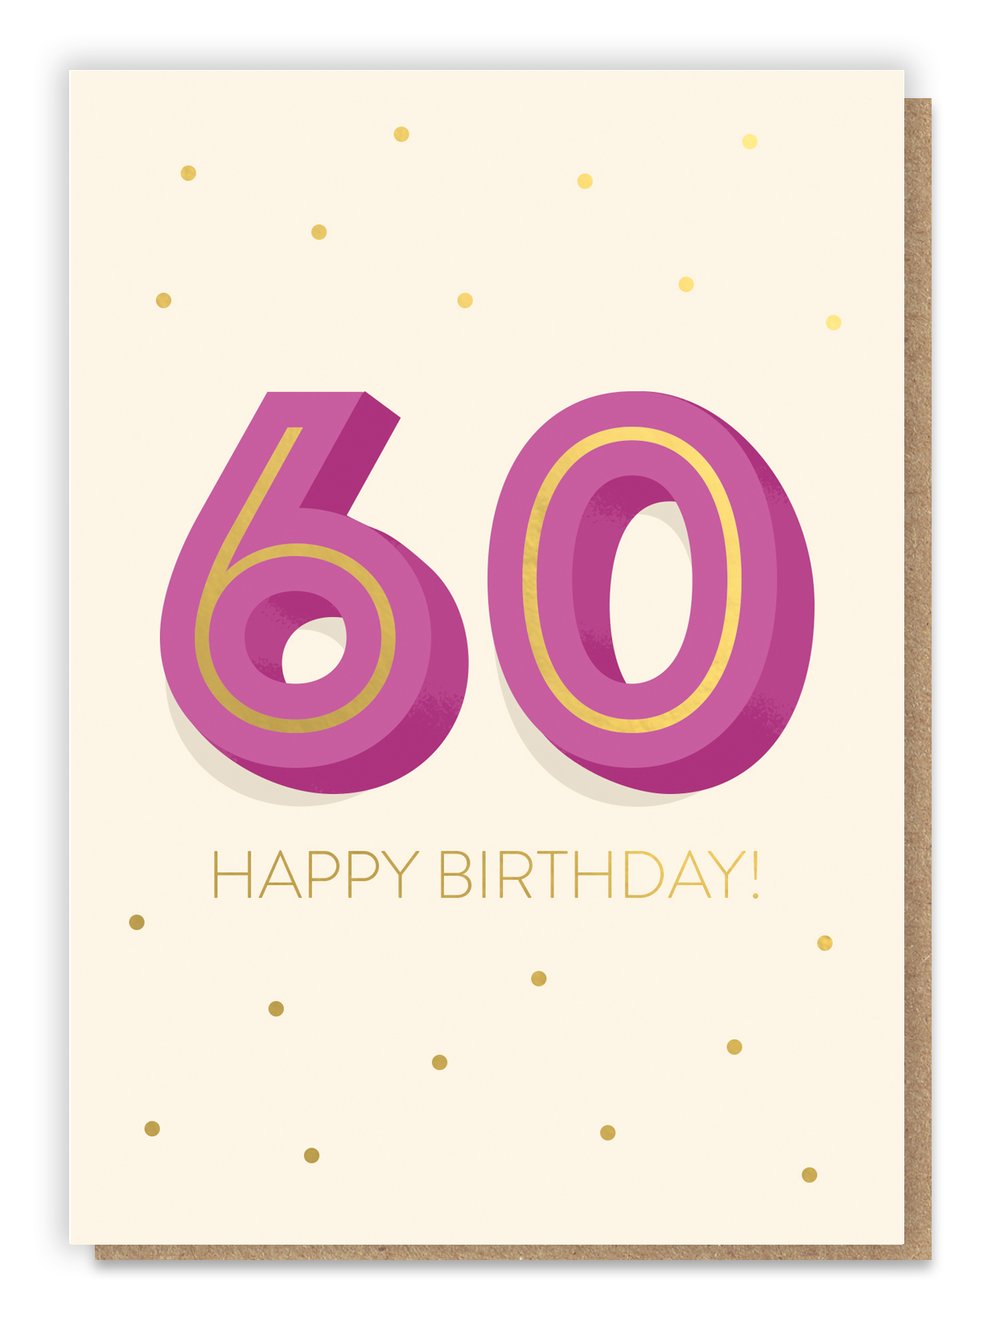 Big 6-0 Birthday Card - Age 60